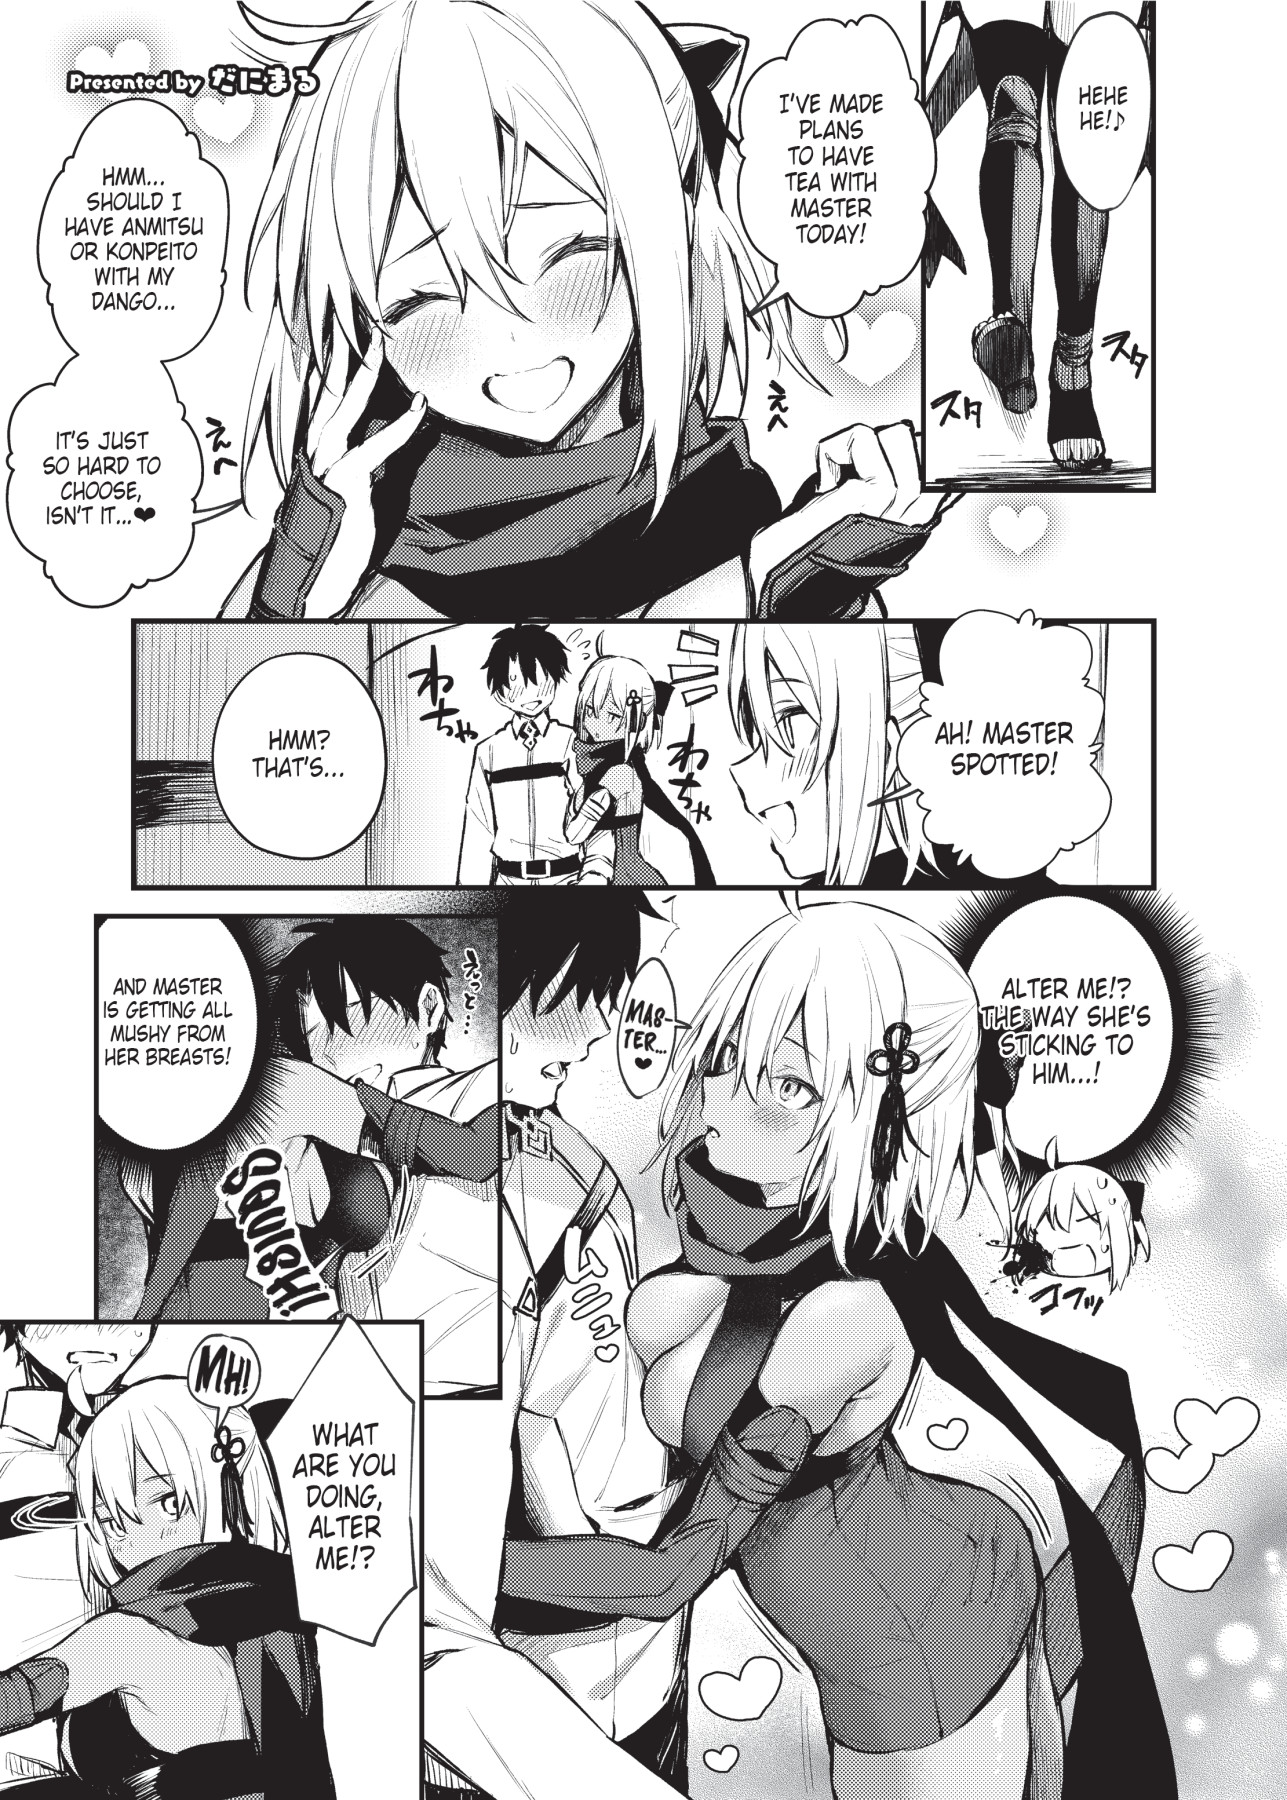 Hentai Manga Comic-The Breast Squeezing Point ~FGO Paizuri Union~ Okita Souji ~-Read-1